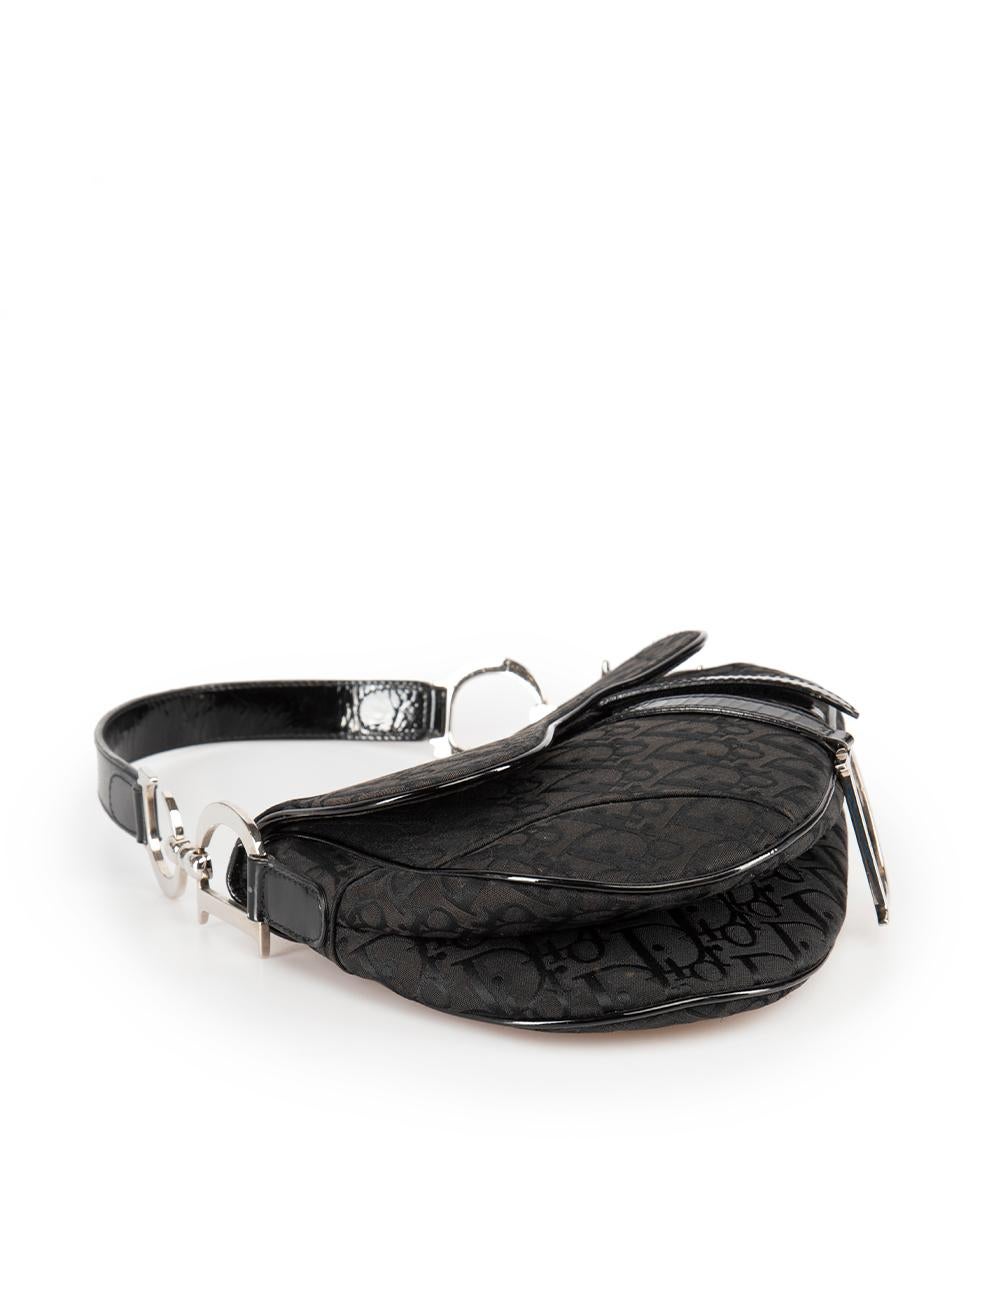 Dior Black Diorissimo Jacquard Saddle Bag For Sale 1